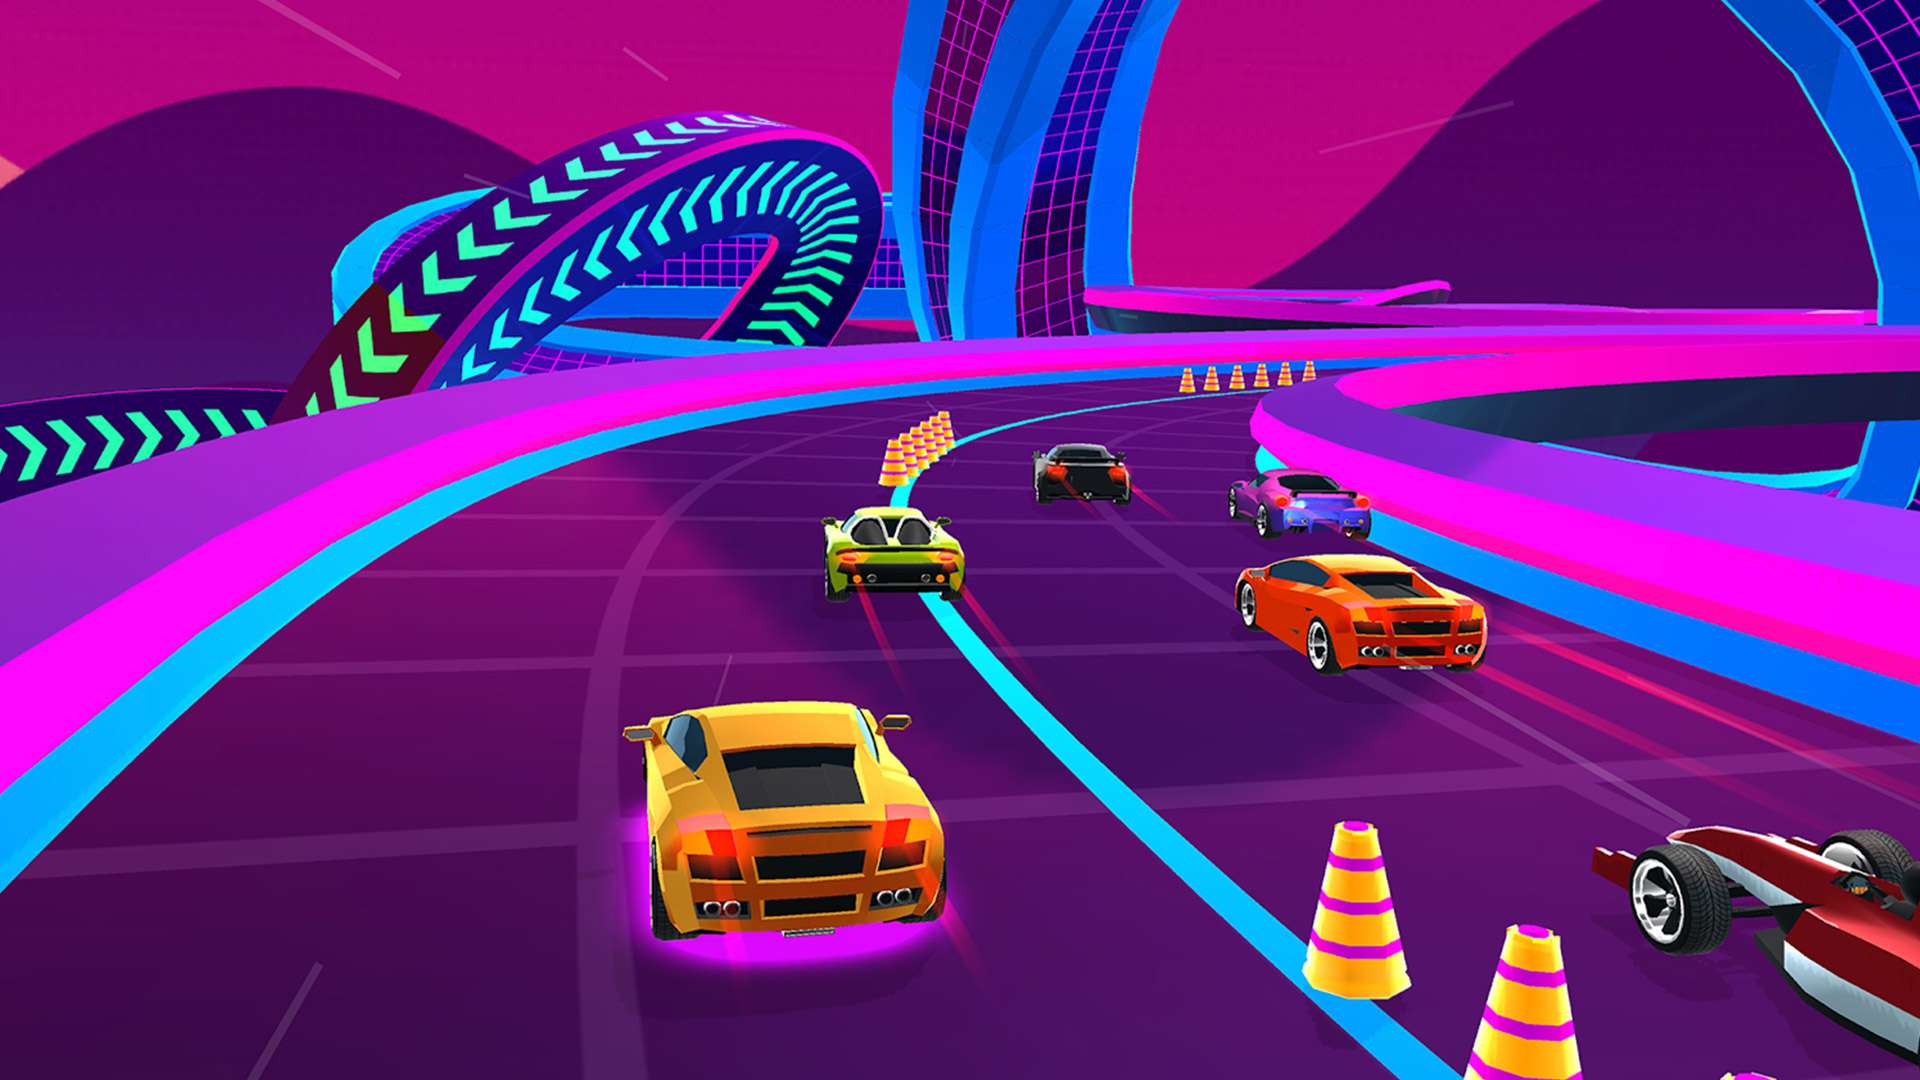 Car Race 3D - Racing Master - Apps on Google Play